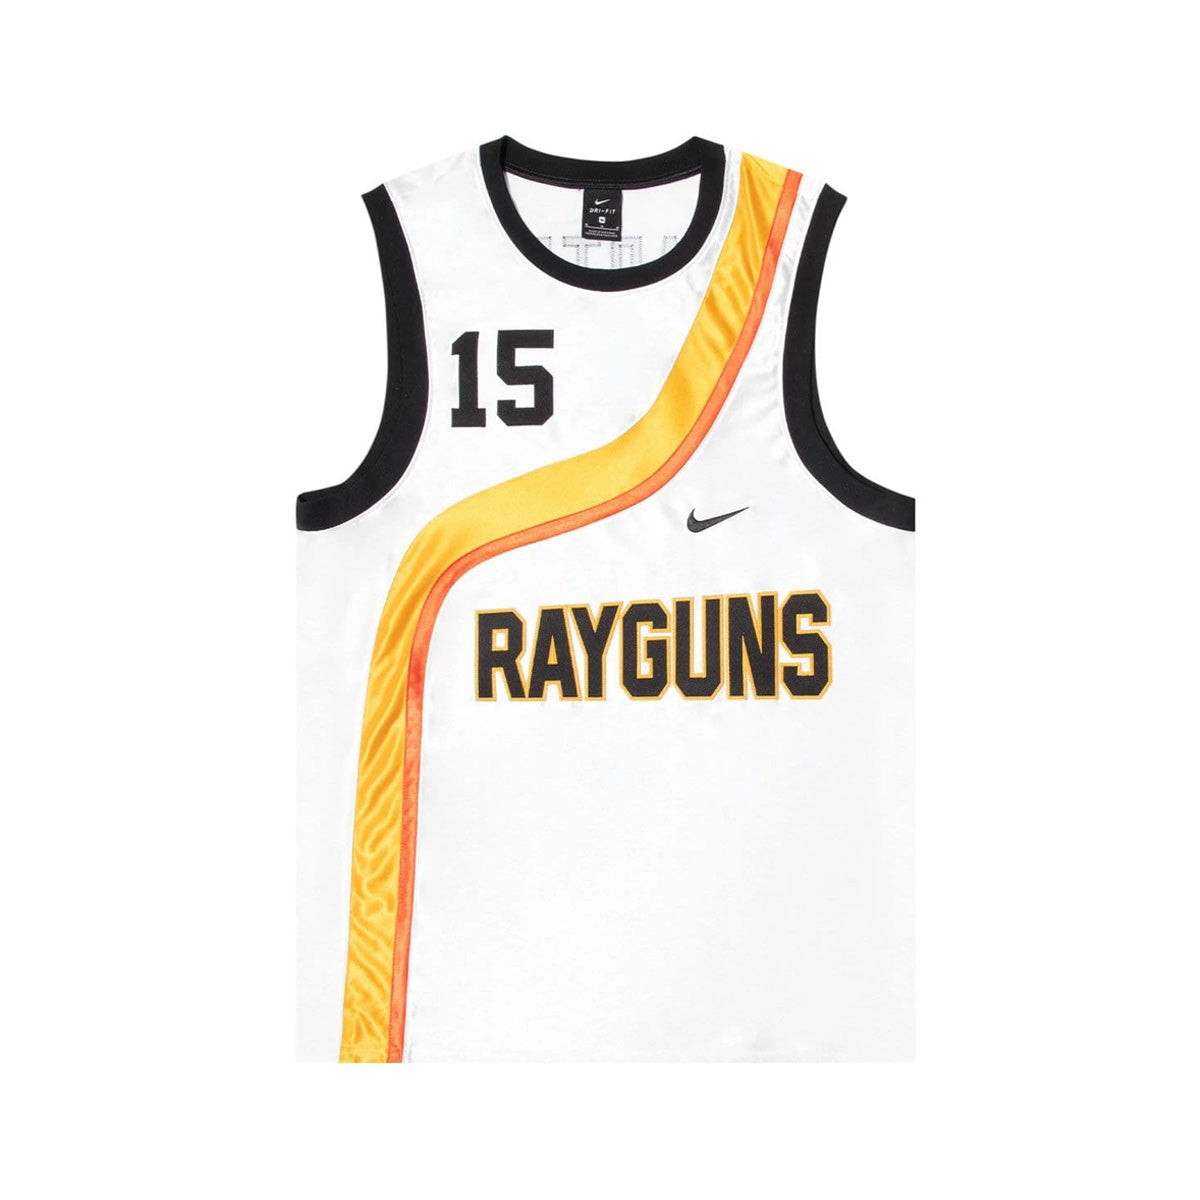 Nike Men's Rayguns Premium Basketball Jersey